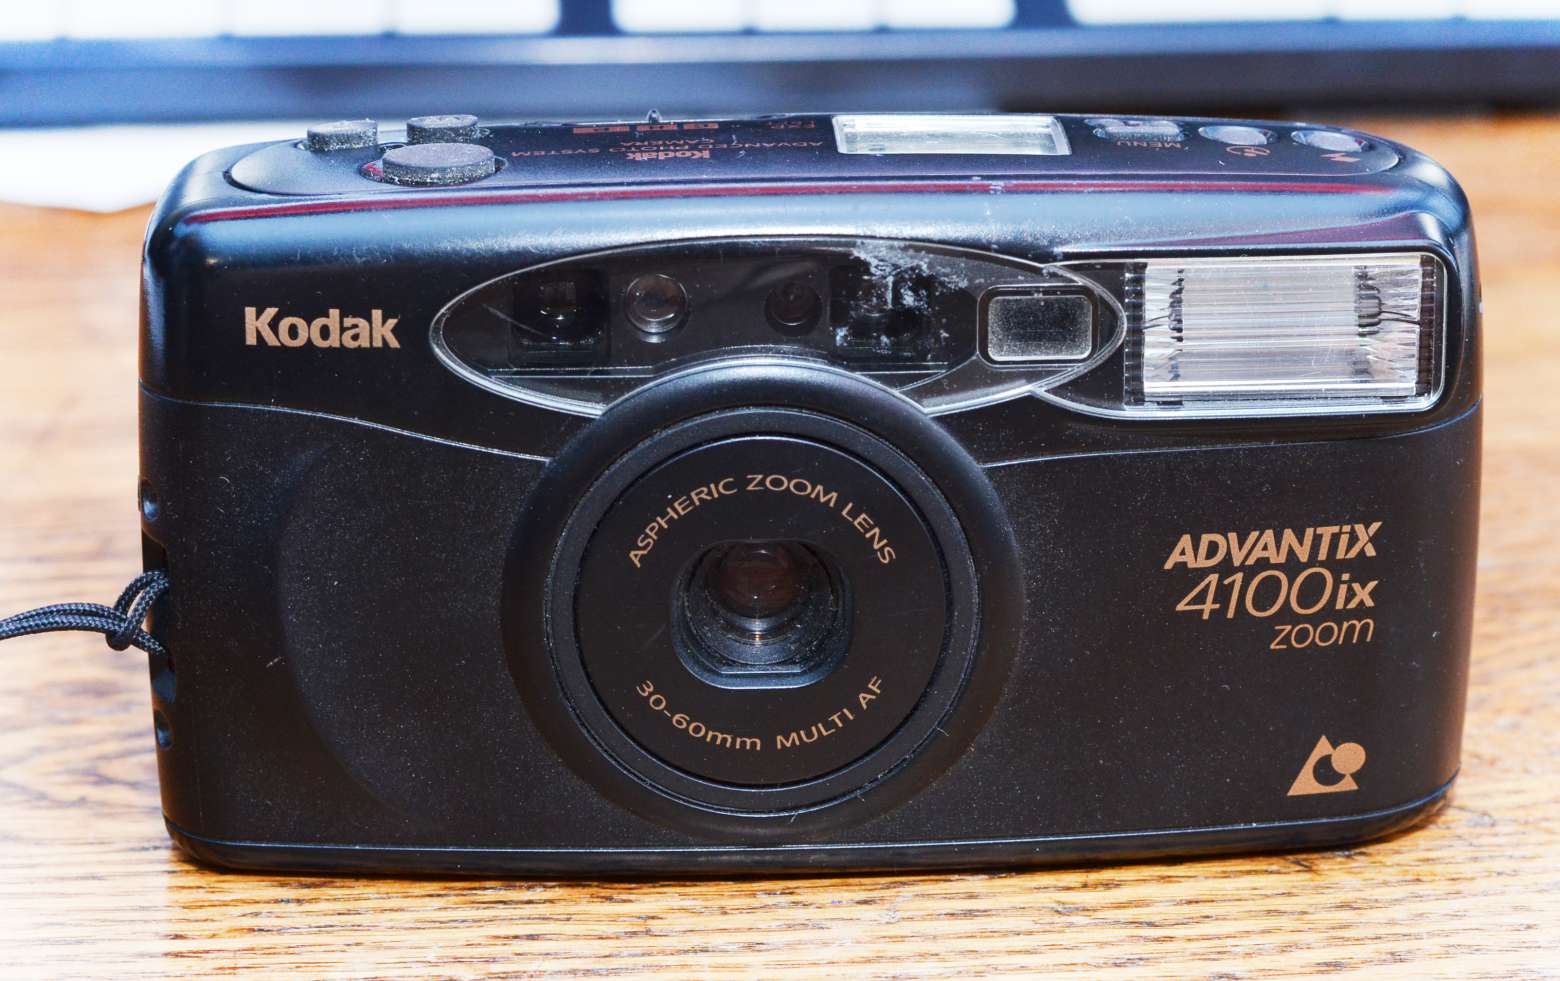 Photo of KODAK ADVANTIX 4100ix Zoom Camera